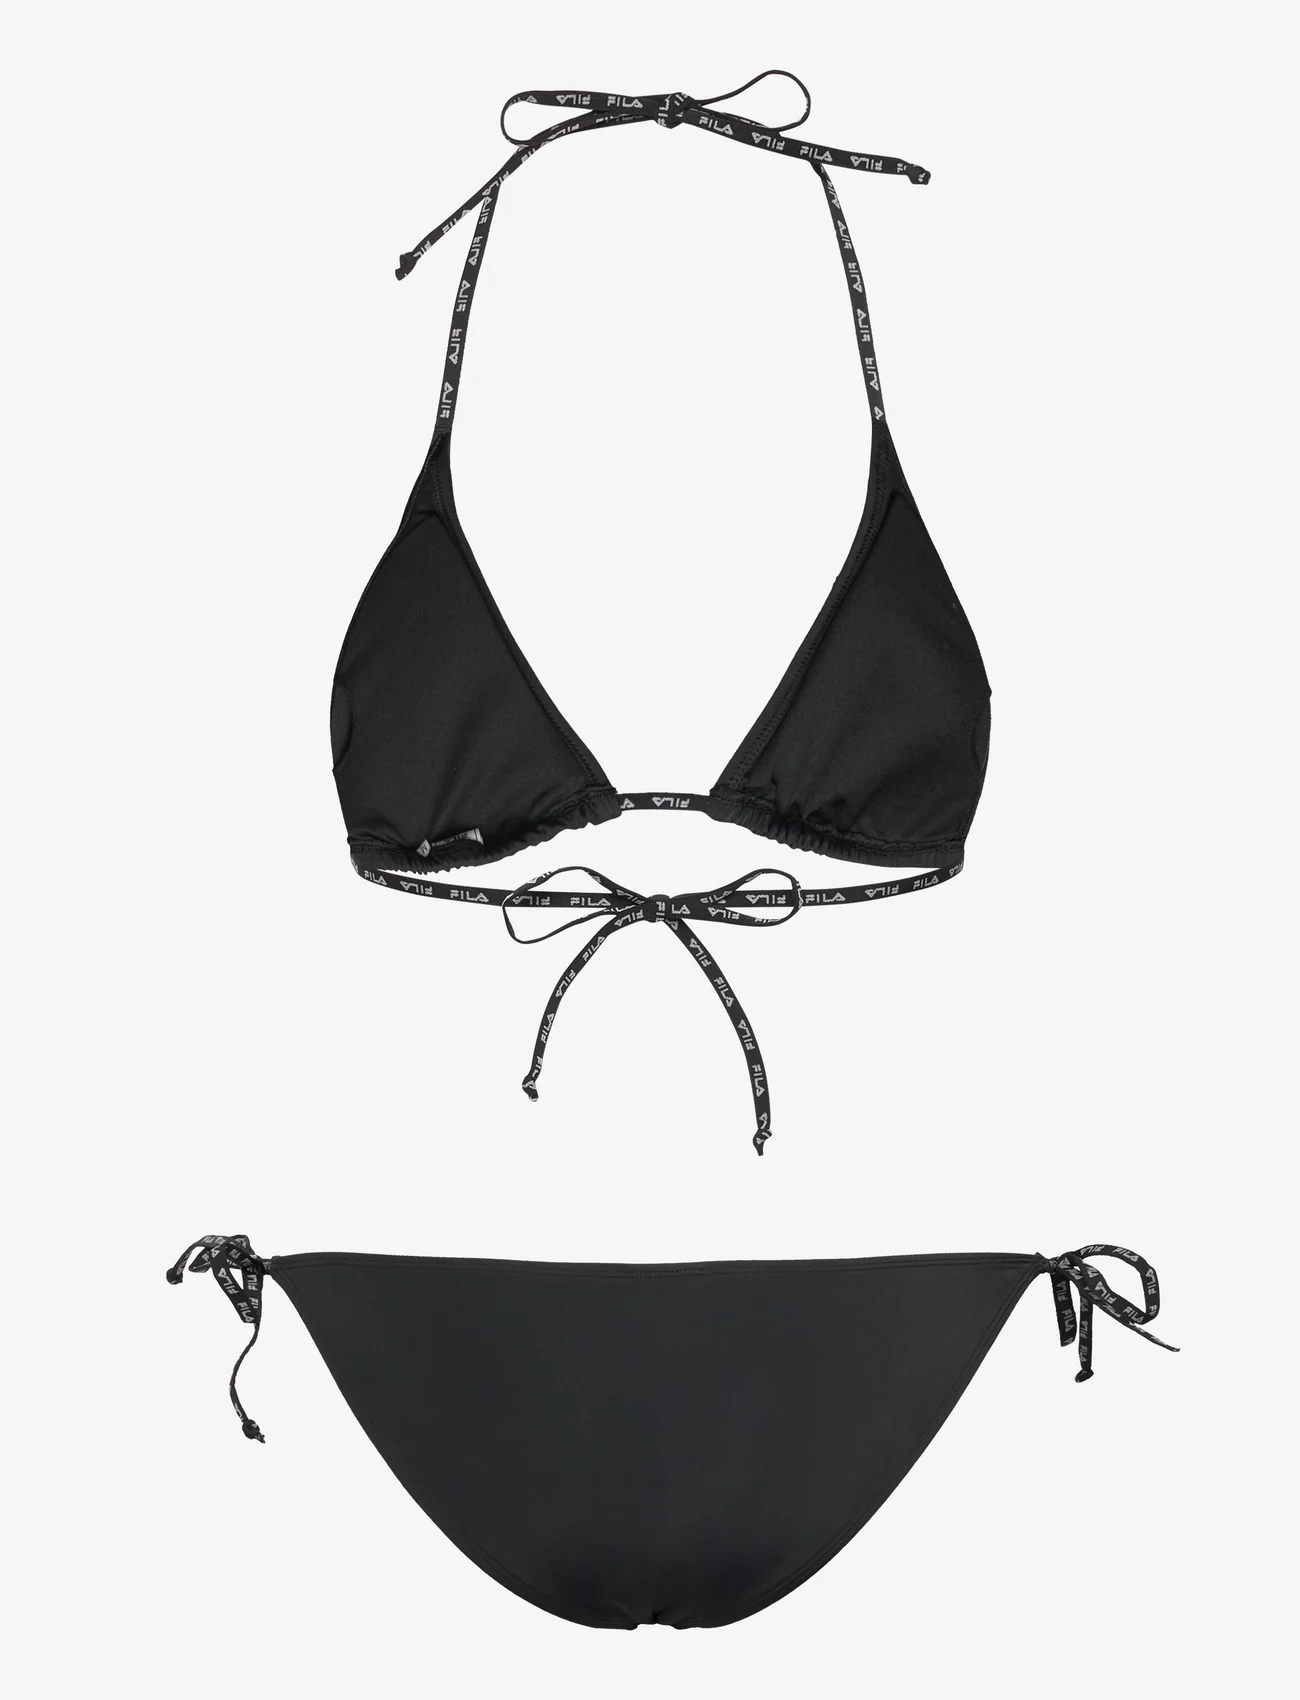 FILA - SIBU triangle bikini - bikini sets - black - 1